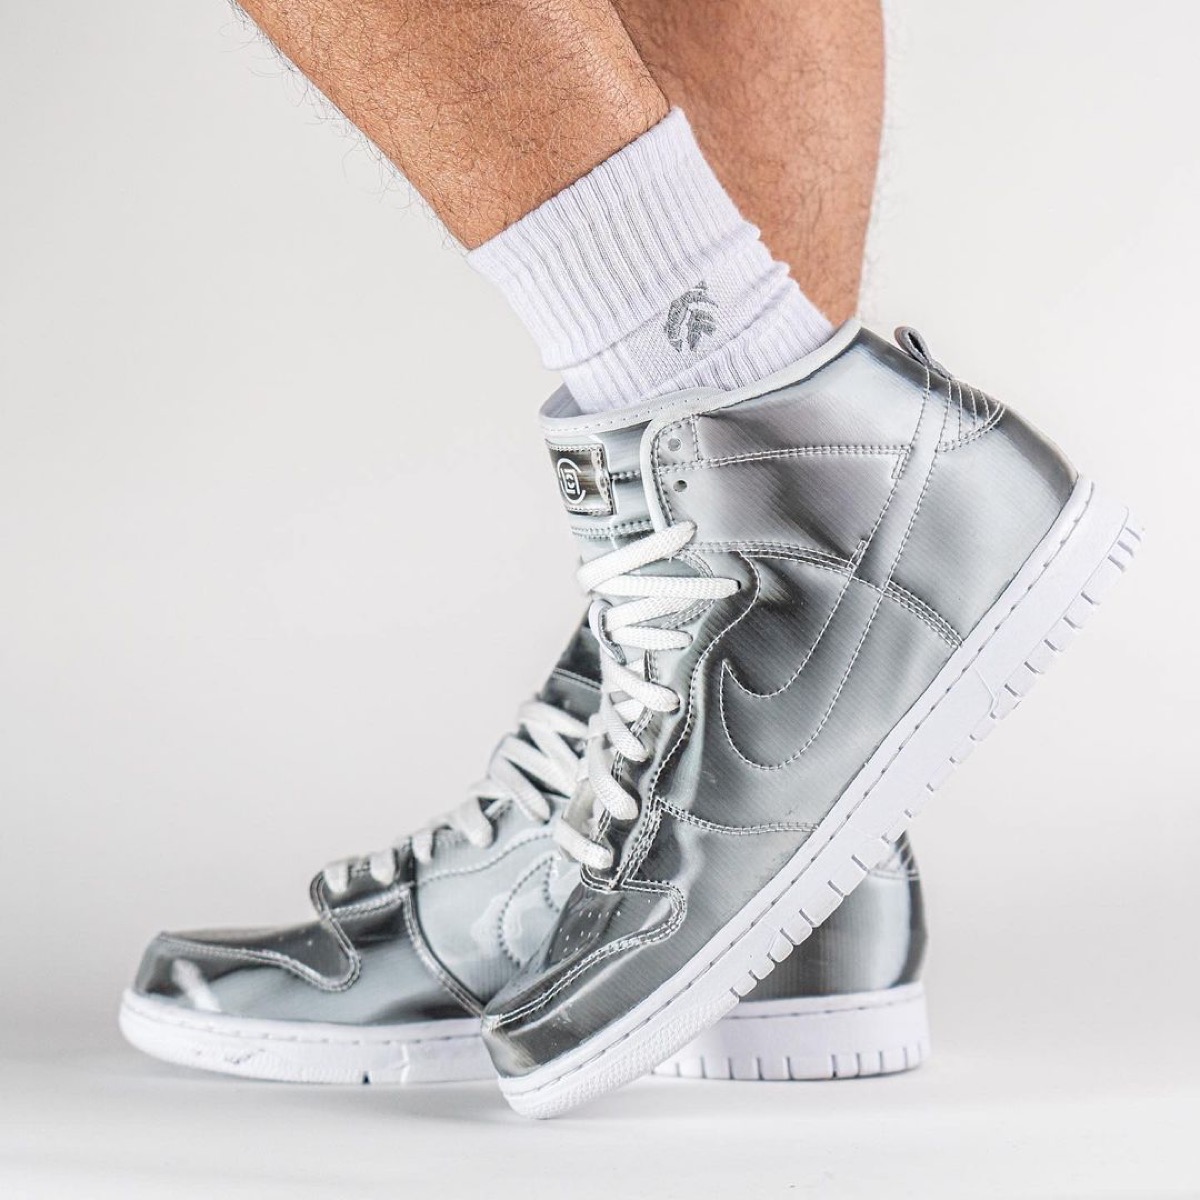 Metallic clot x Nike Dunk High “silver metallic” dunk collection插图